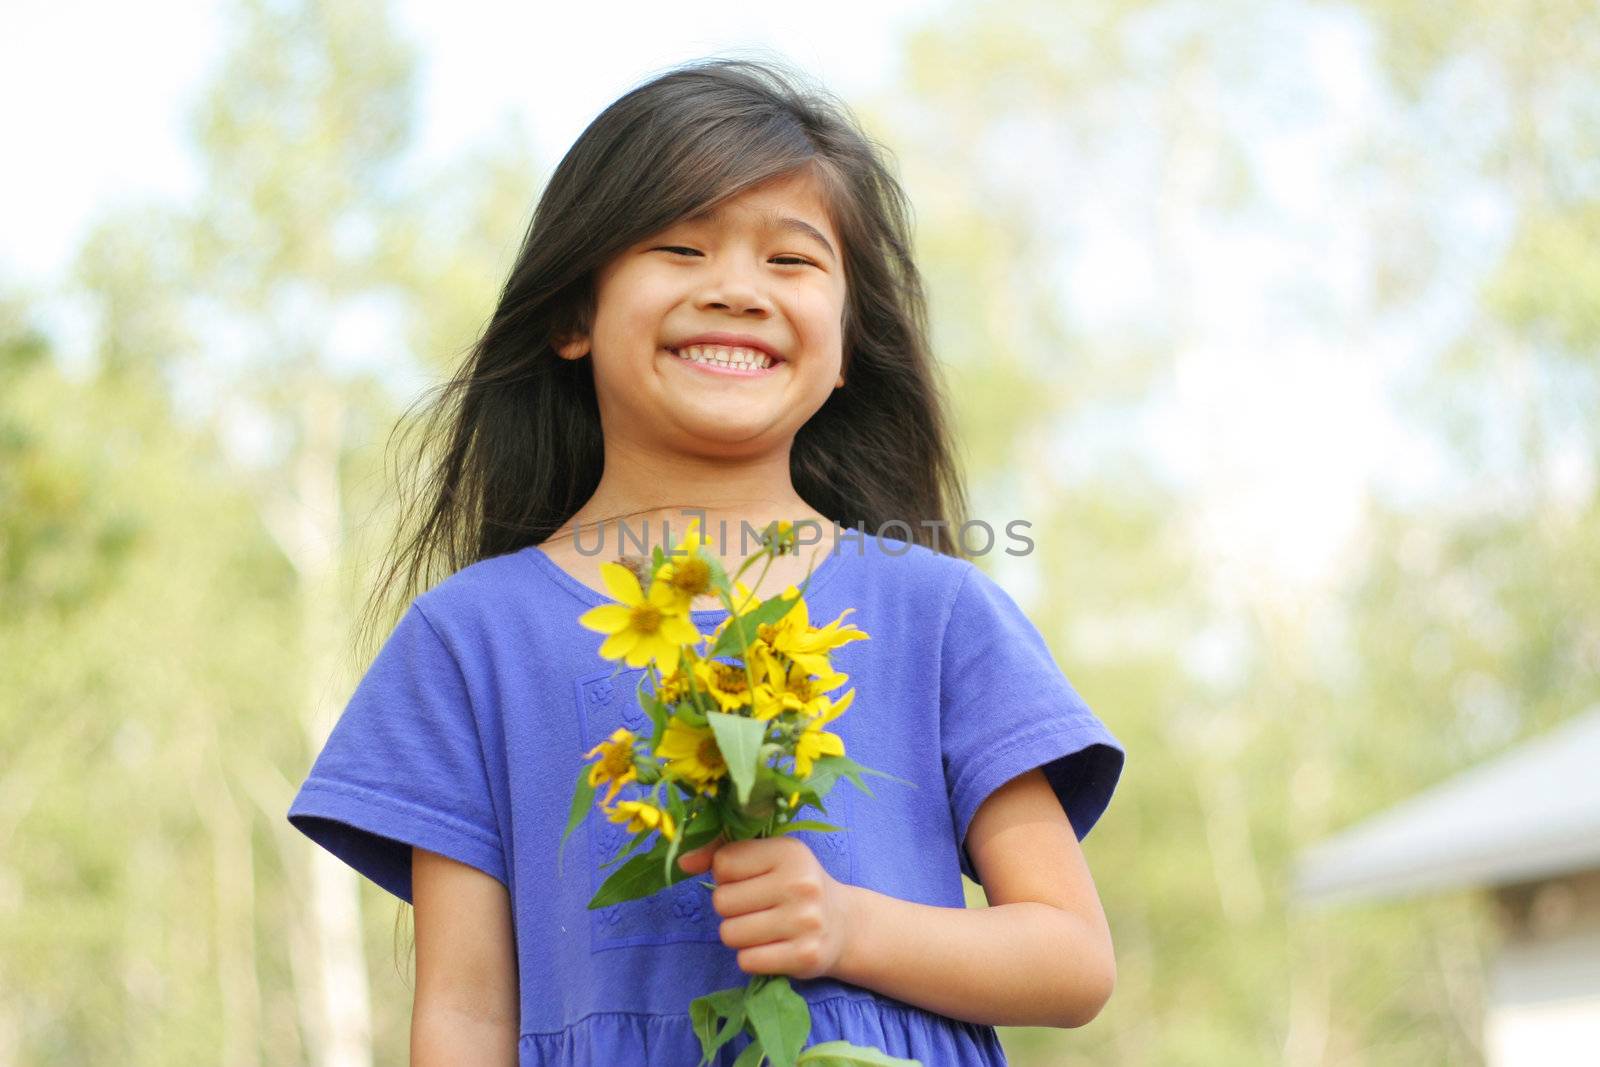 Girl holding bouquet of sunflowers by jarenwicklund